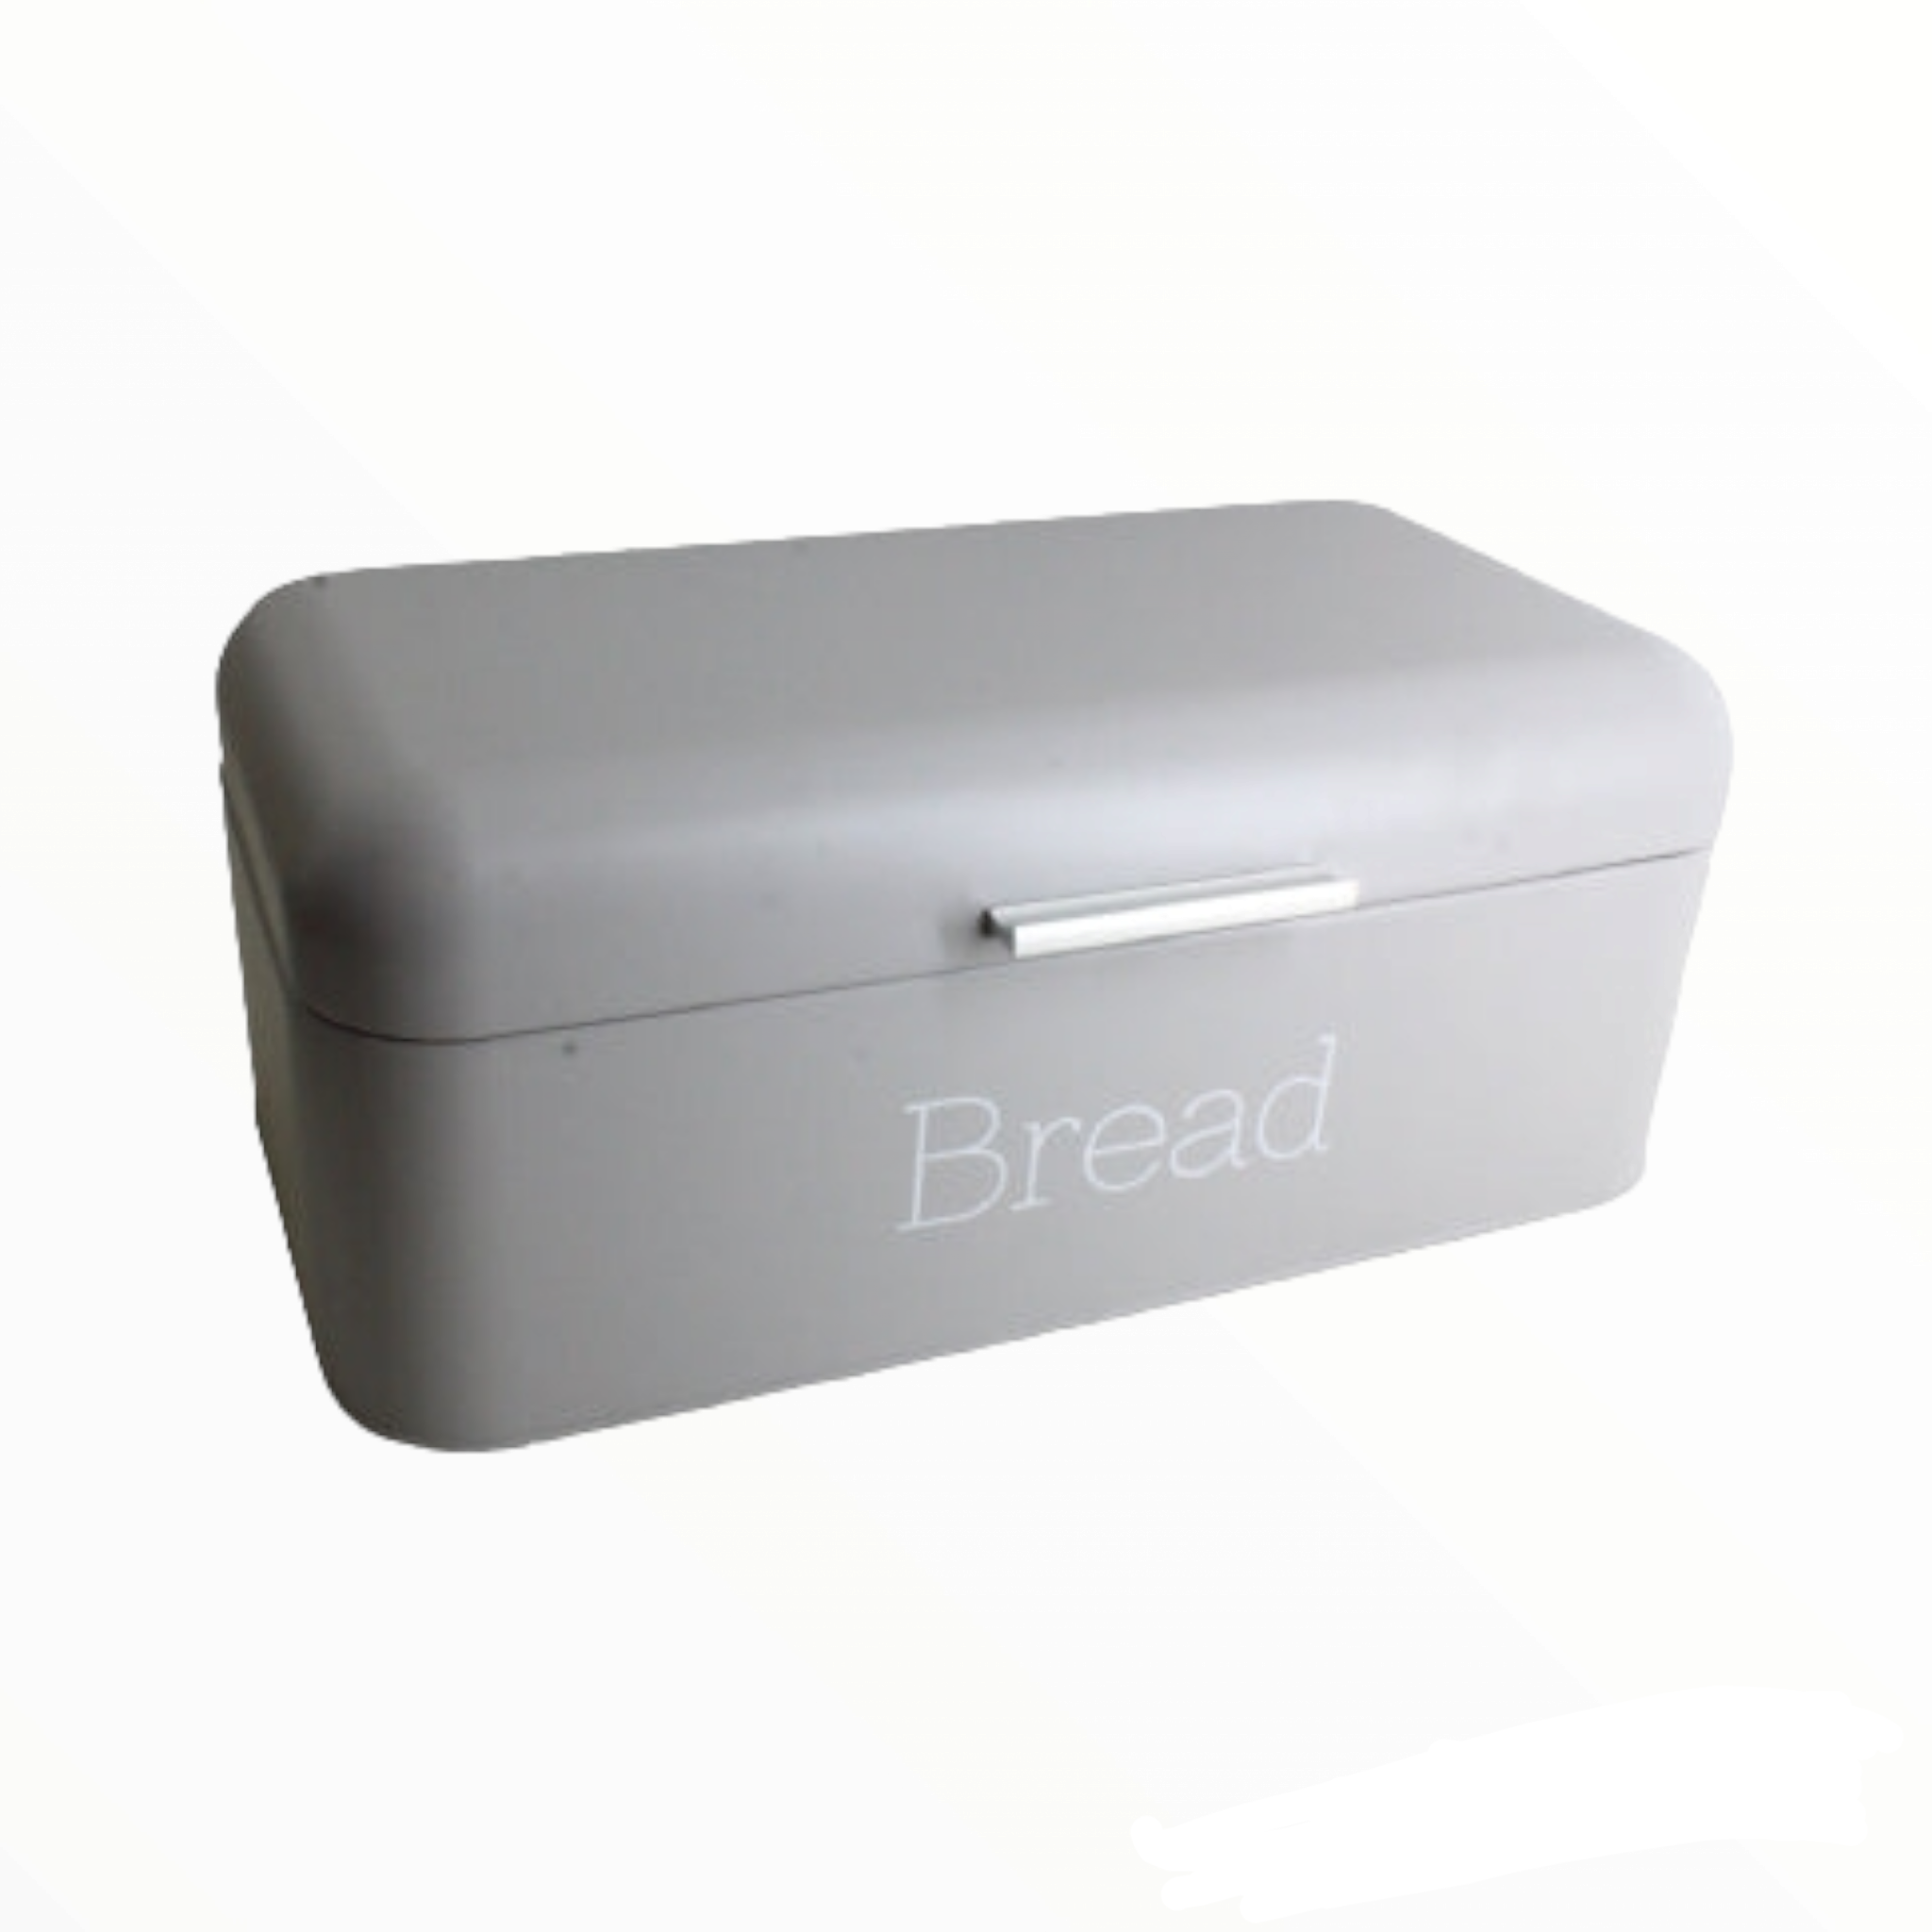 Bread Bin White Plain HV154